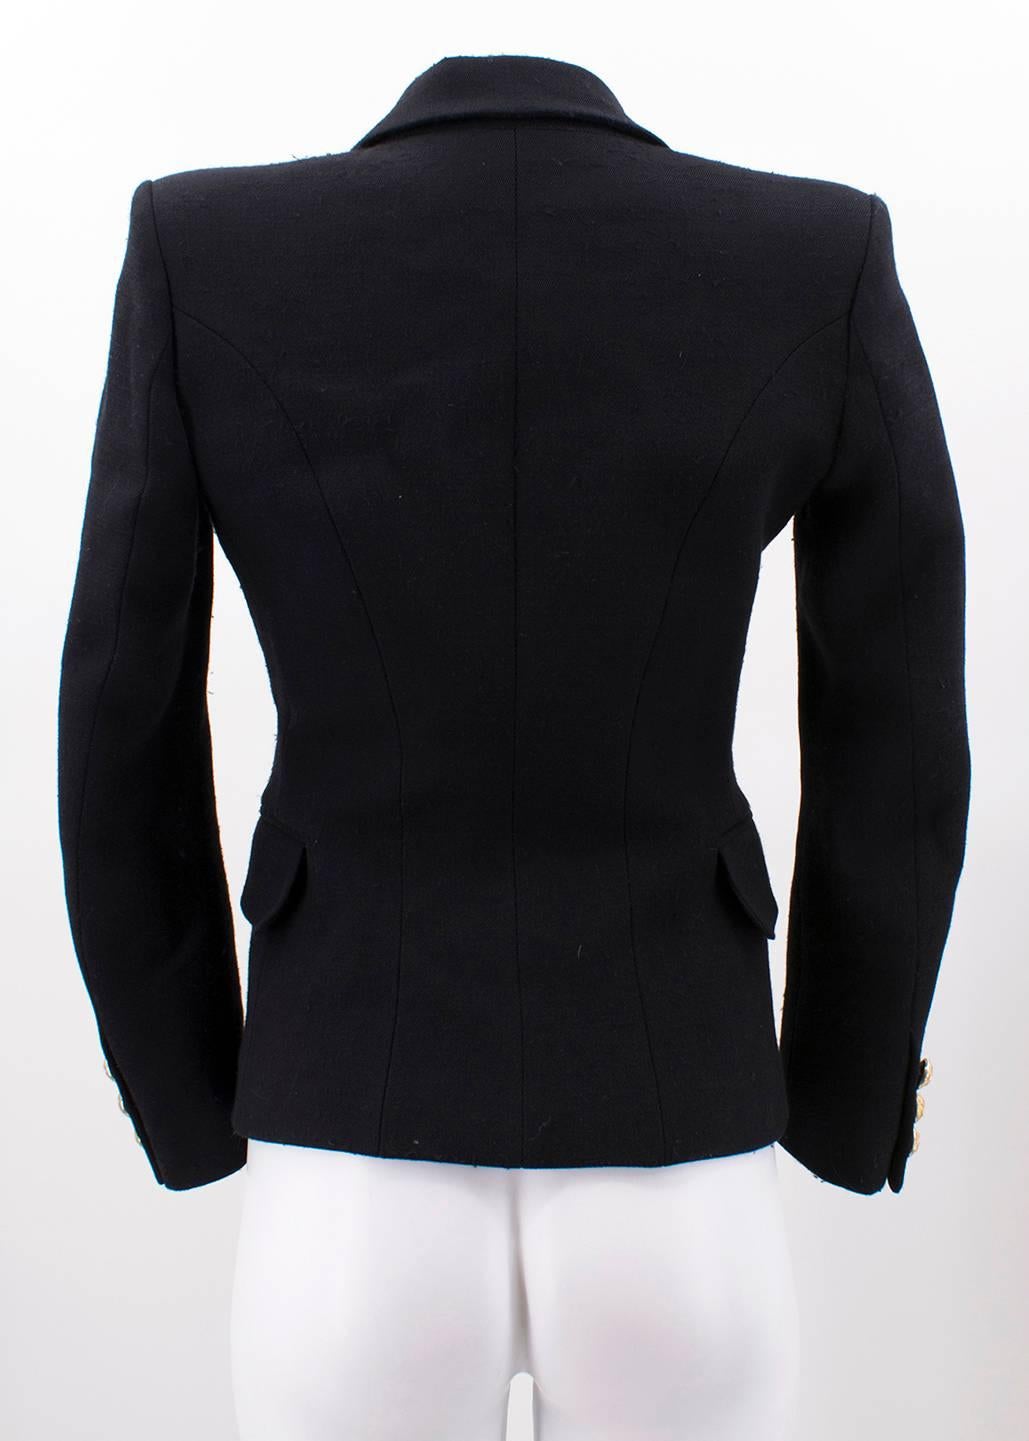 Balmain Black Single Breasted Blazer Jacket For Sale 4